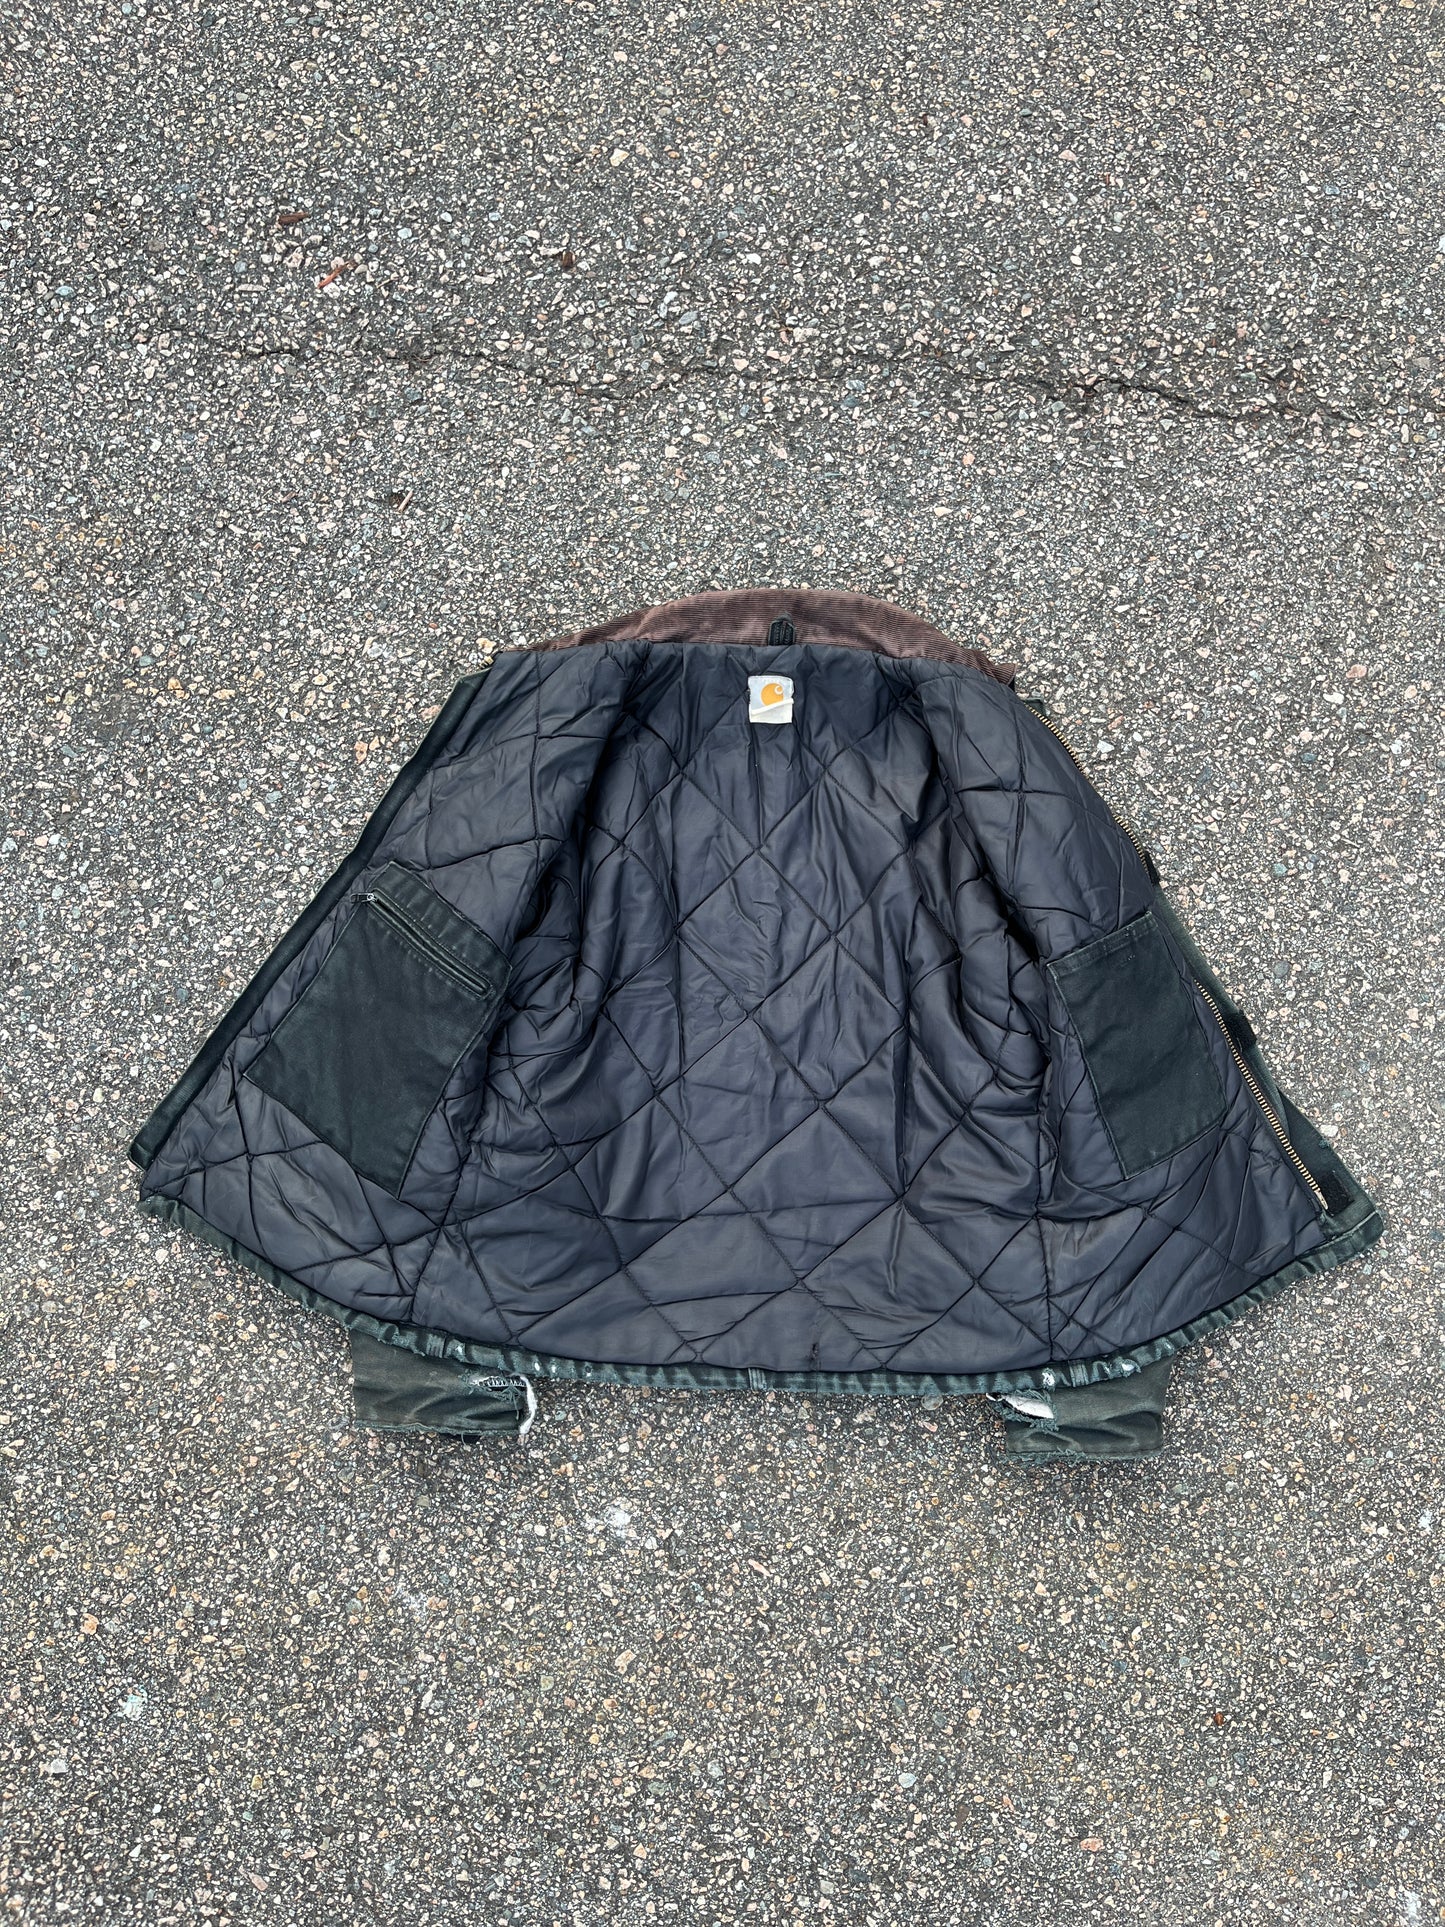 Faded n Distressed Black Carhartt Arctic Jacket - Medium